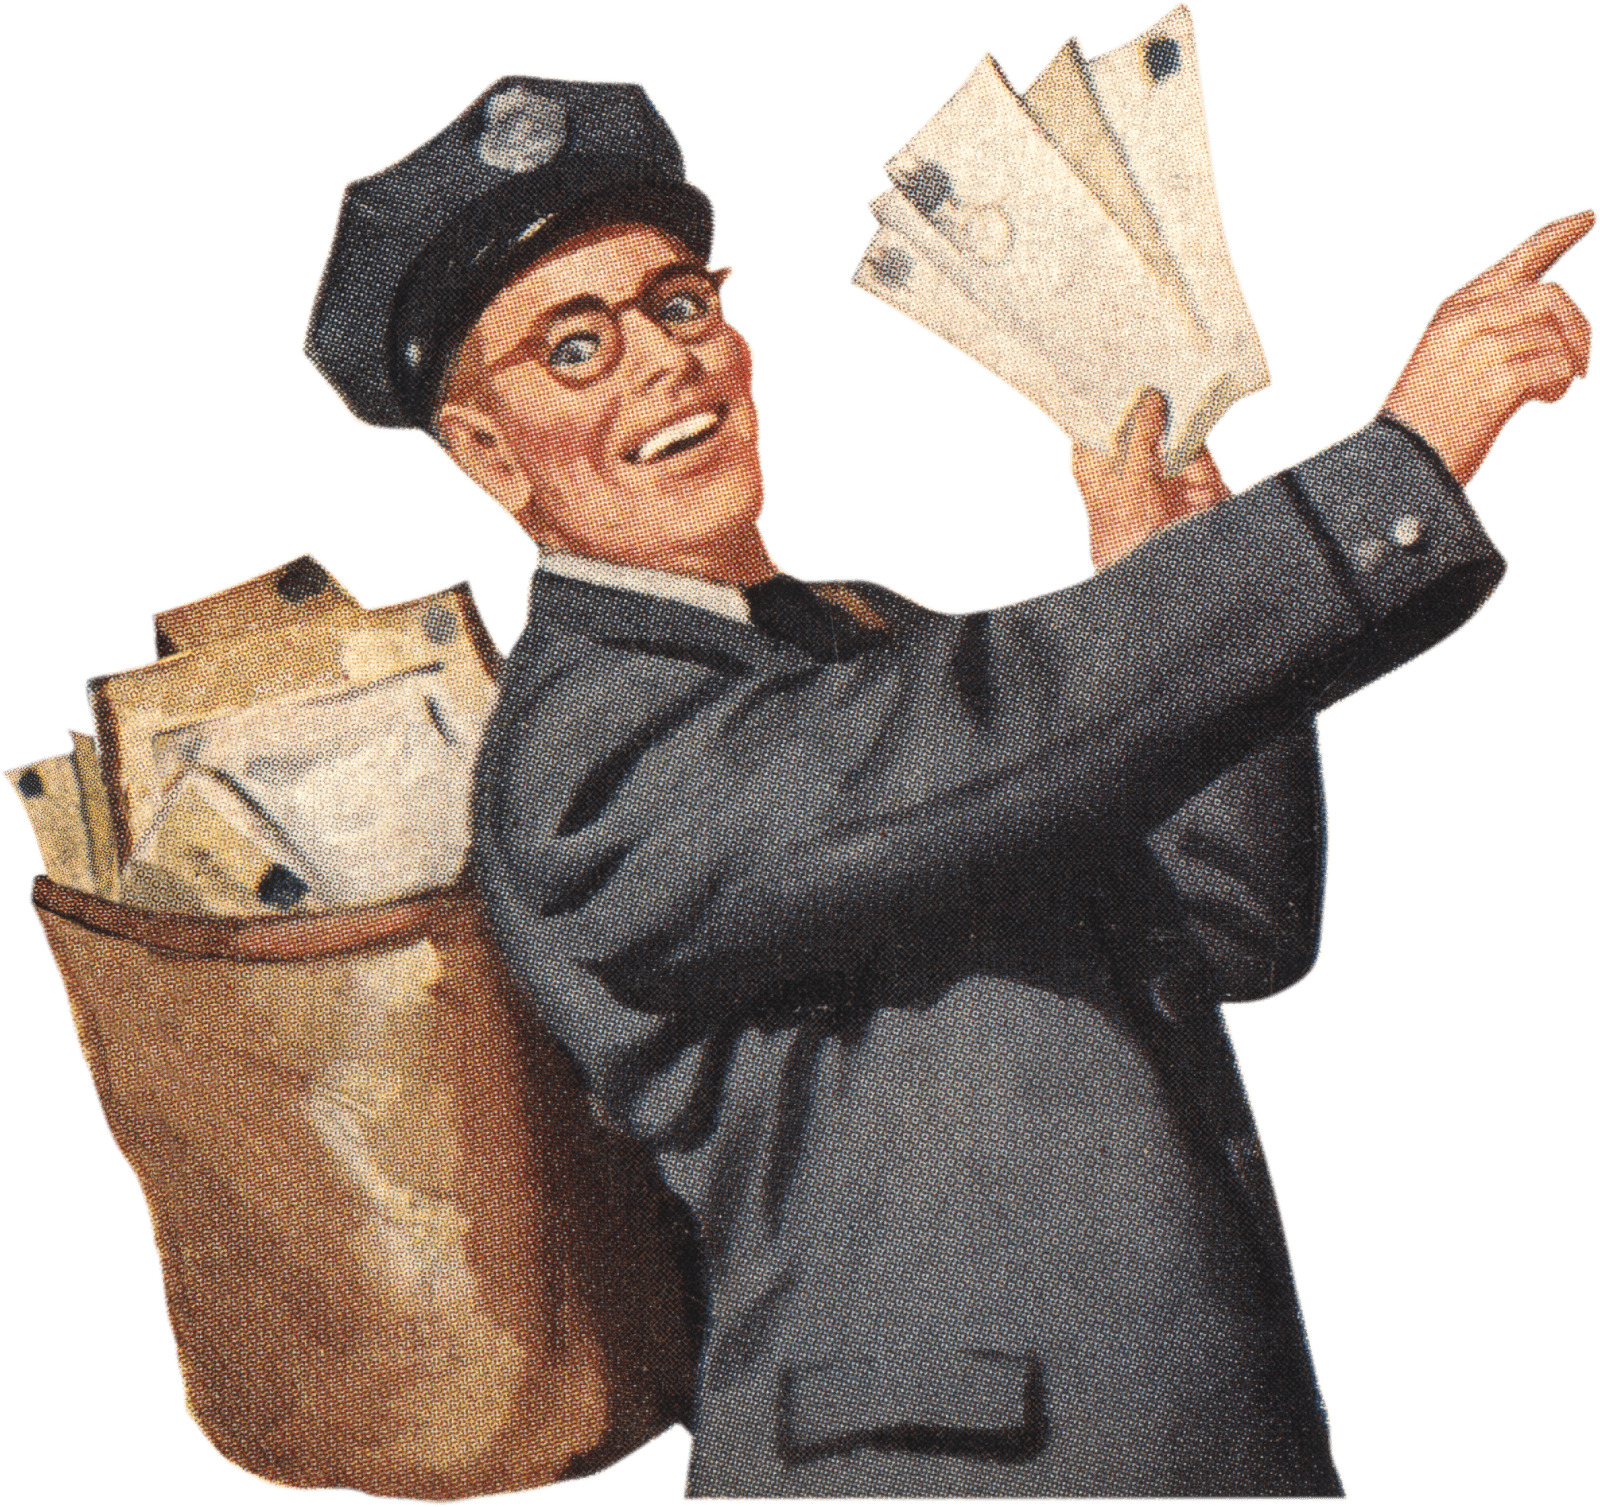 Vintage Postman icons